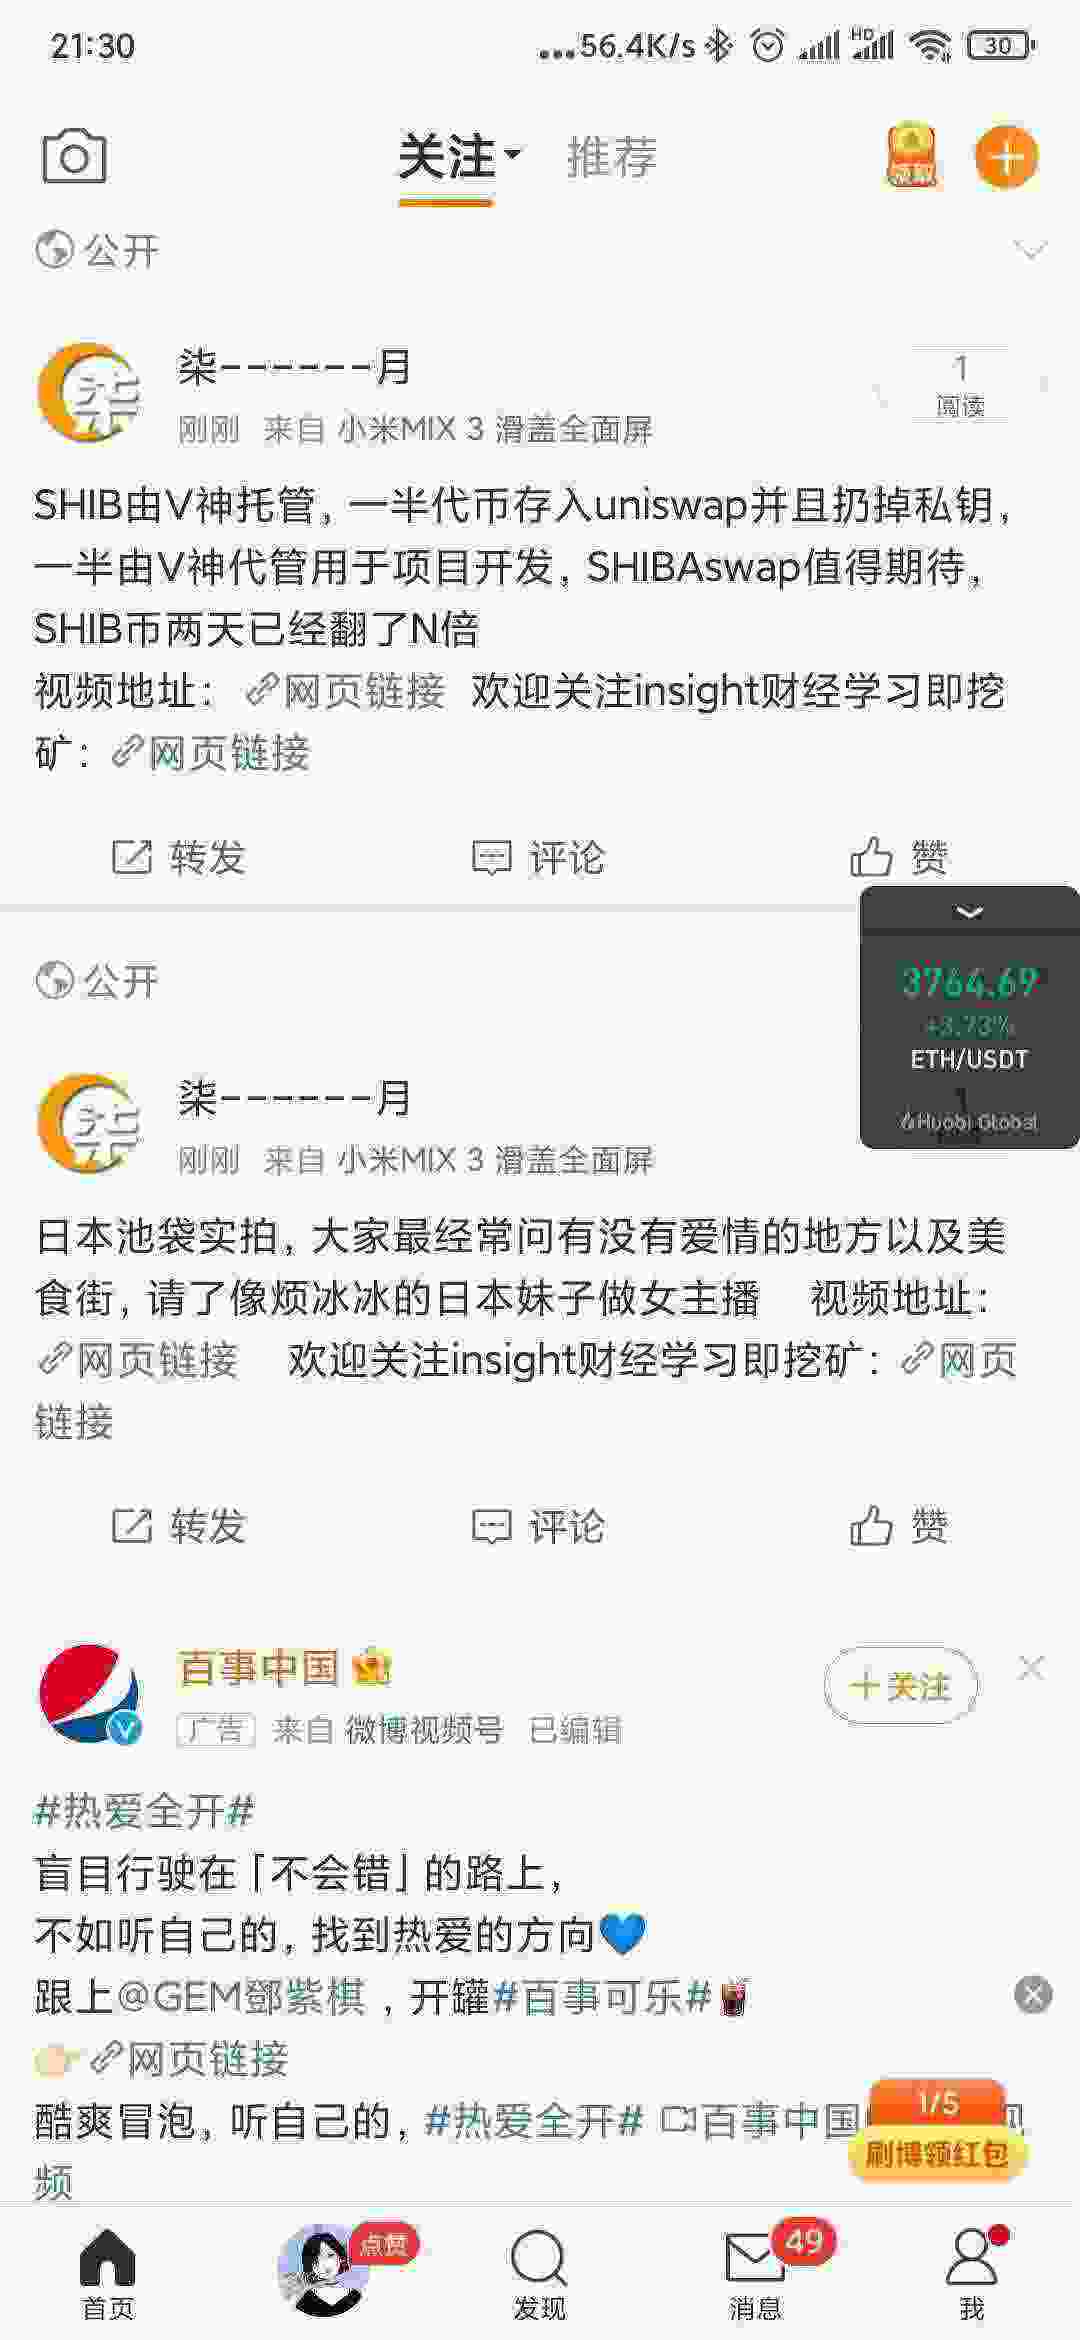 Screenshot_2021-05-09-21-30-09-701_com.sina.weibo.jpg